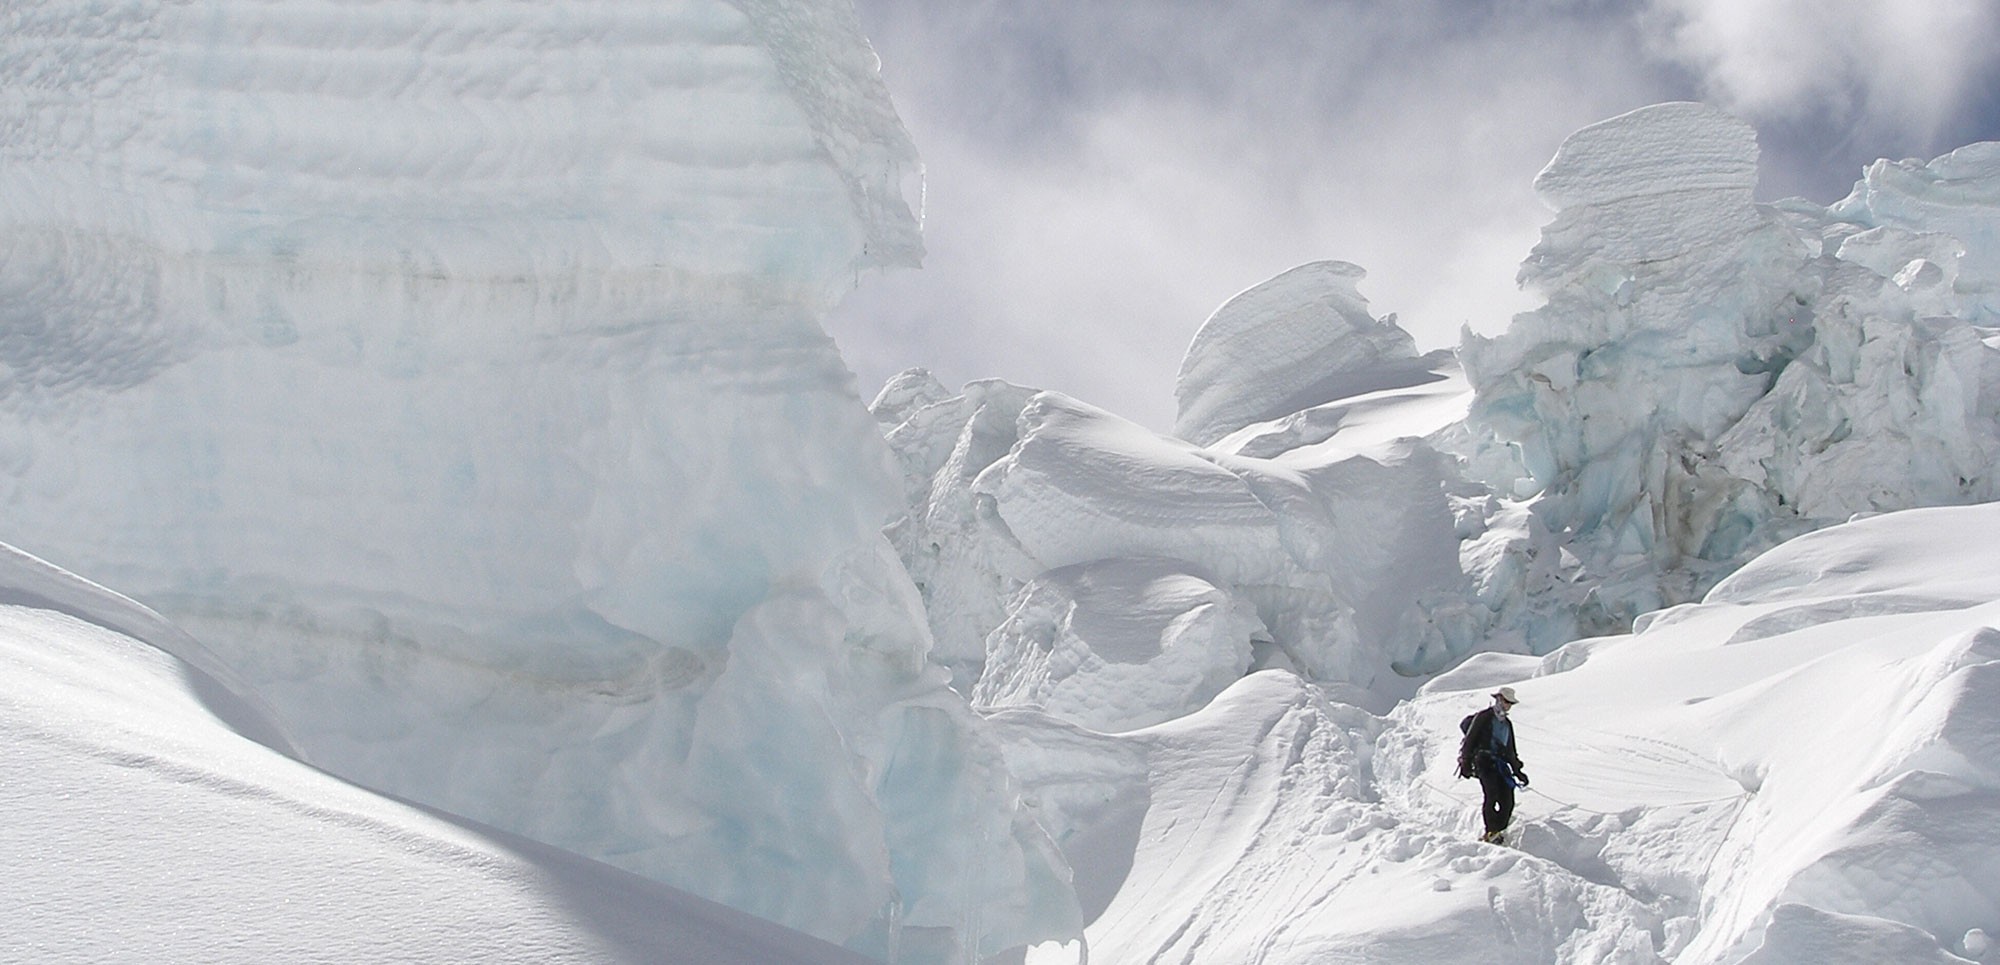 Ben Clowes descending through the Khumbu Icefall